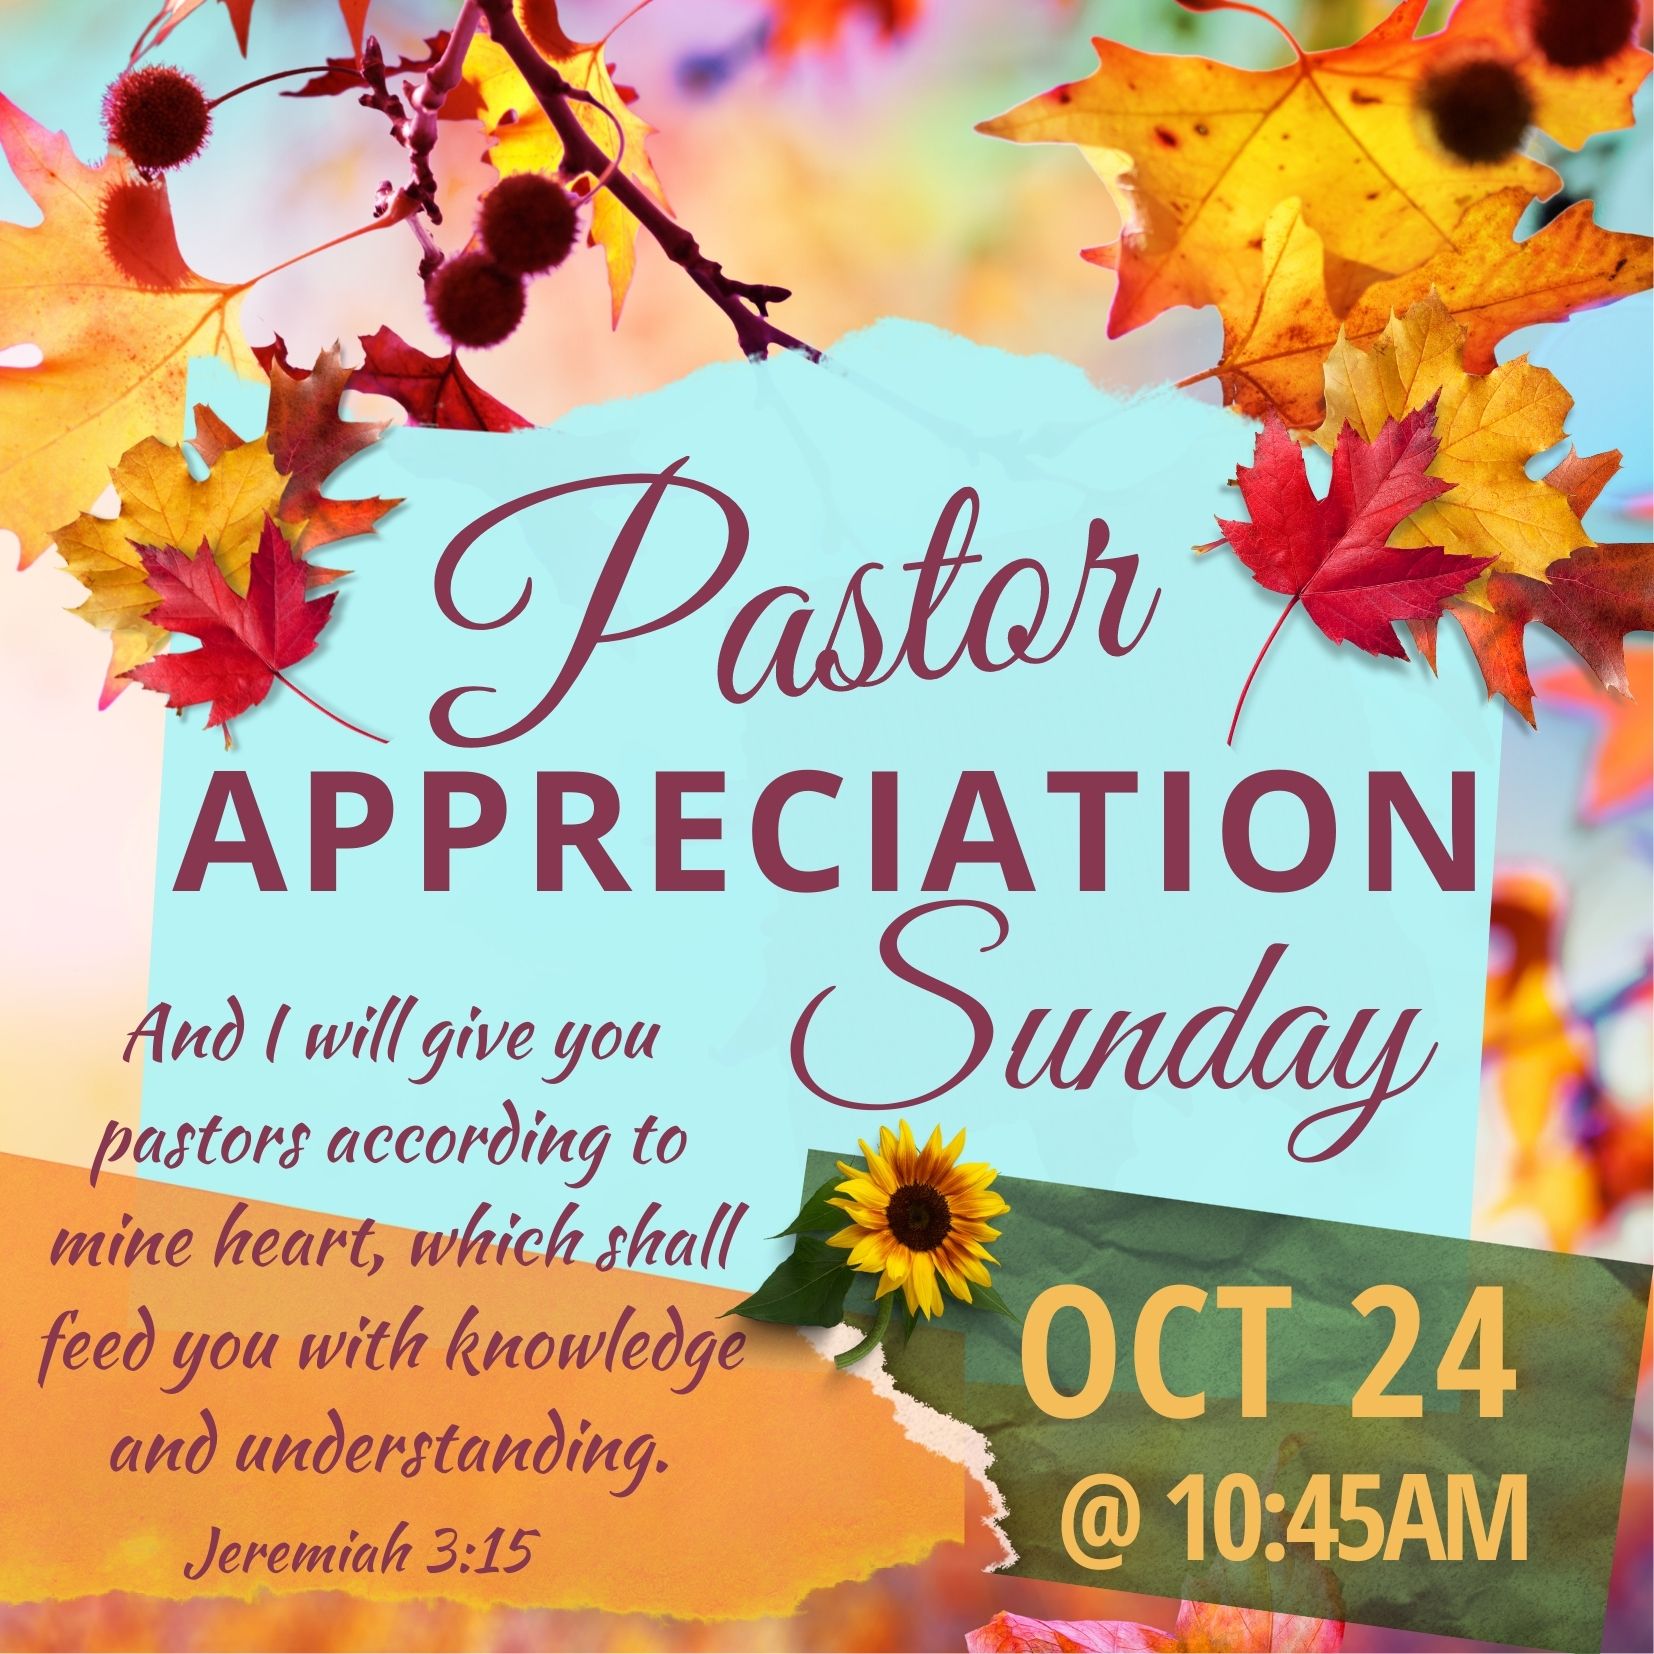 PASTOR APPRECIATION SUNDAY House Of Hope Church